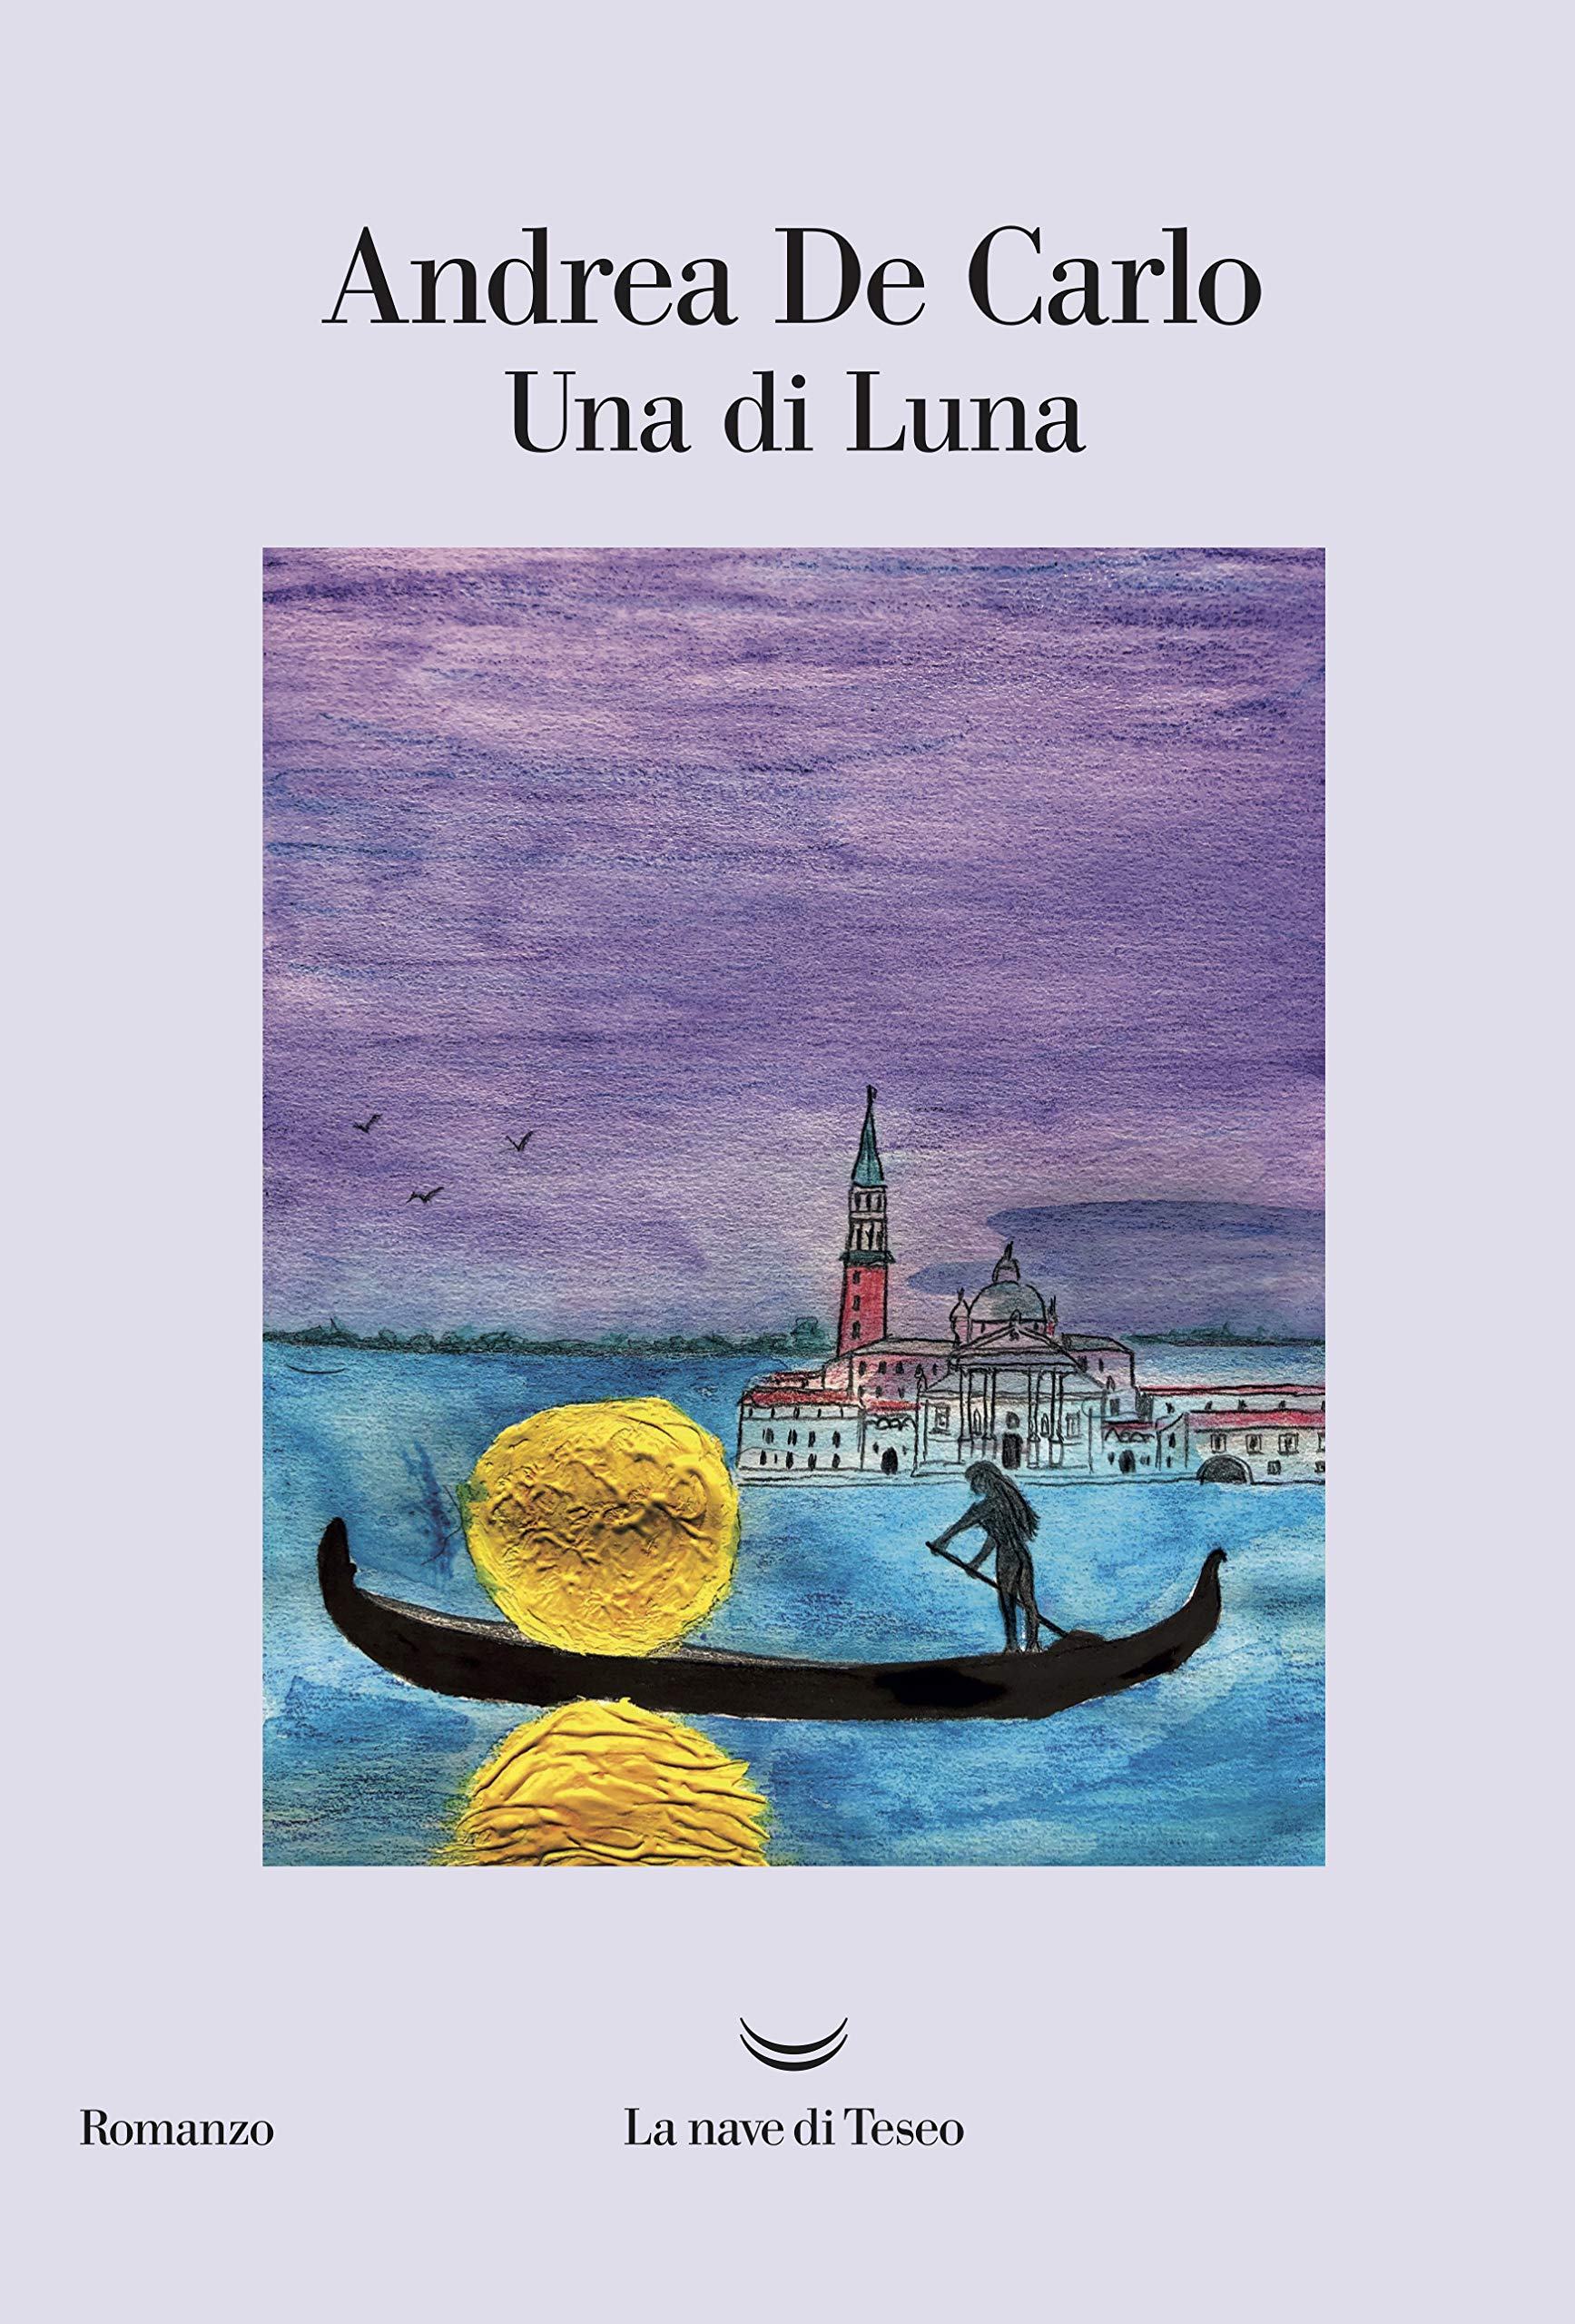 Andrea De Carlo – Una di Luna